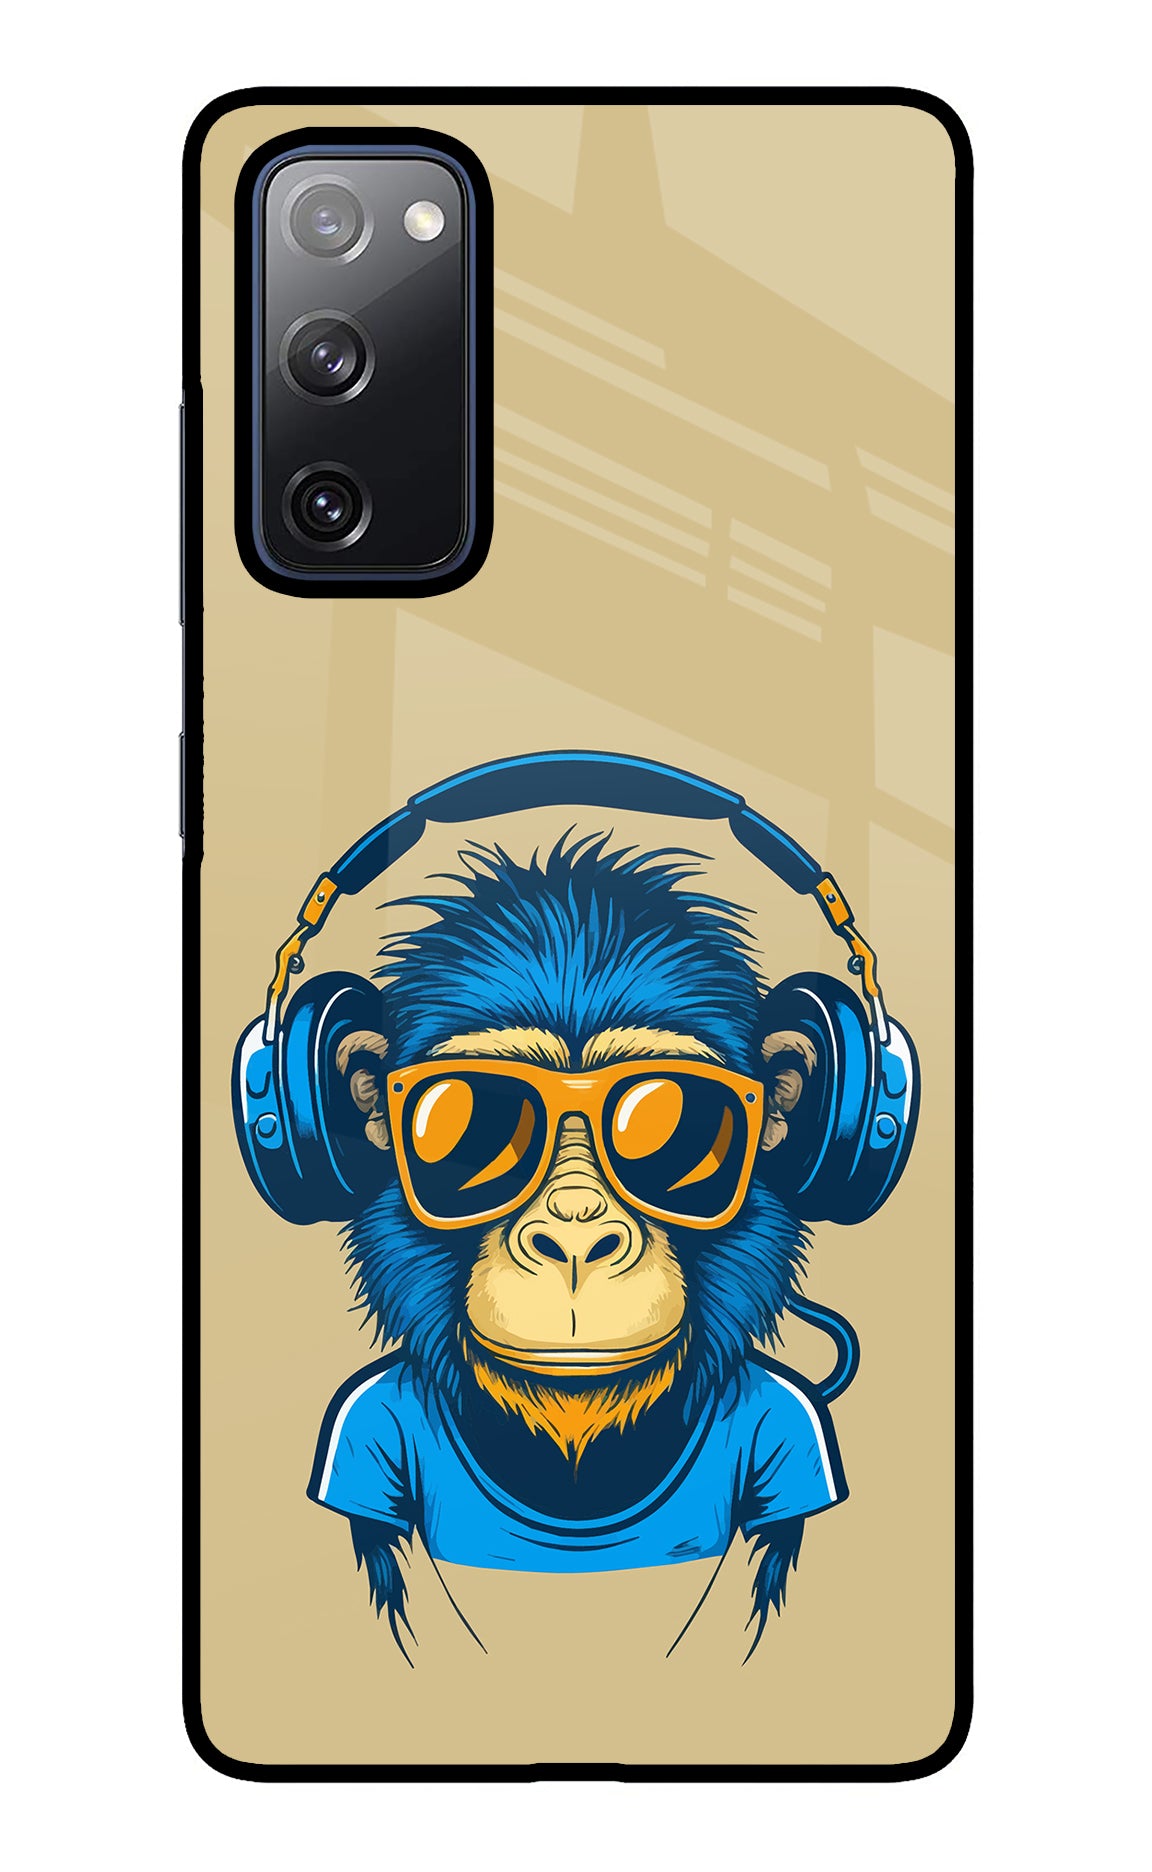 Monkey Headphone Samsung S20 FE Back Cover